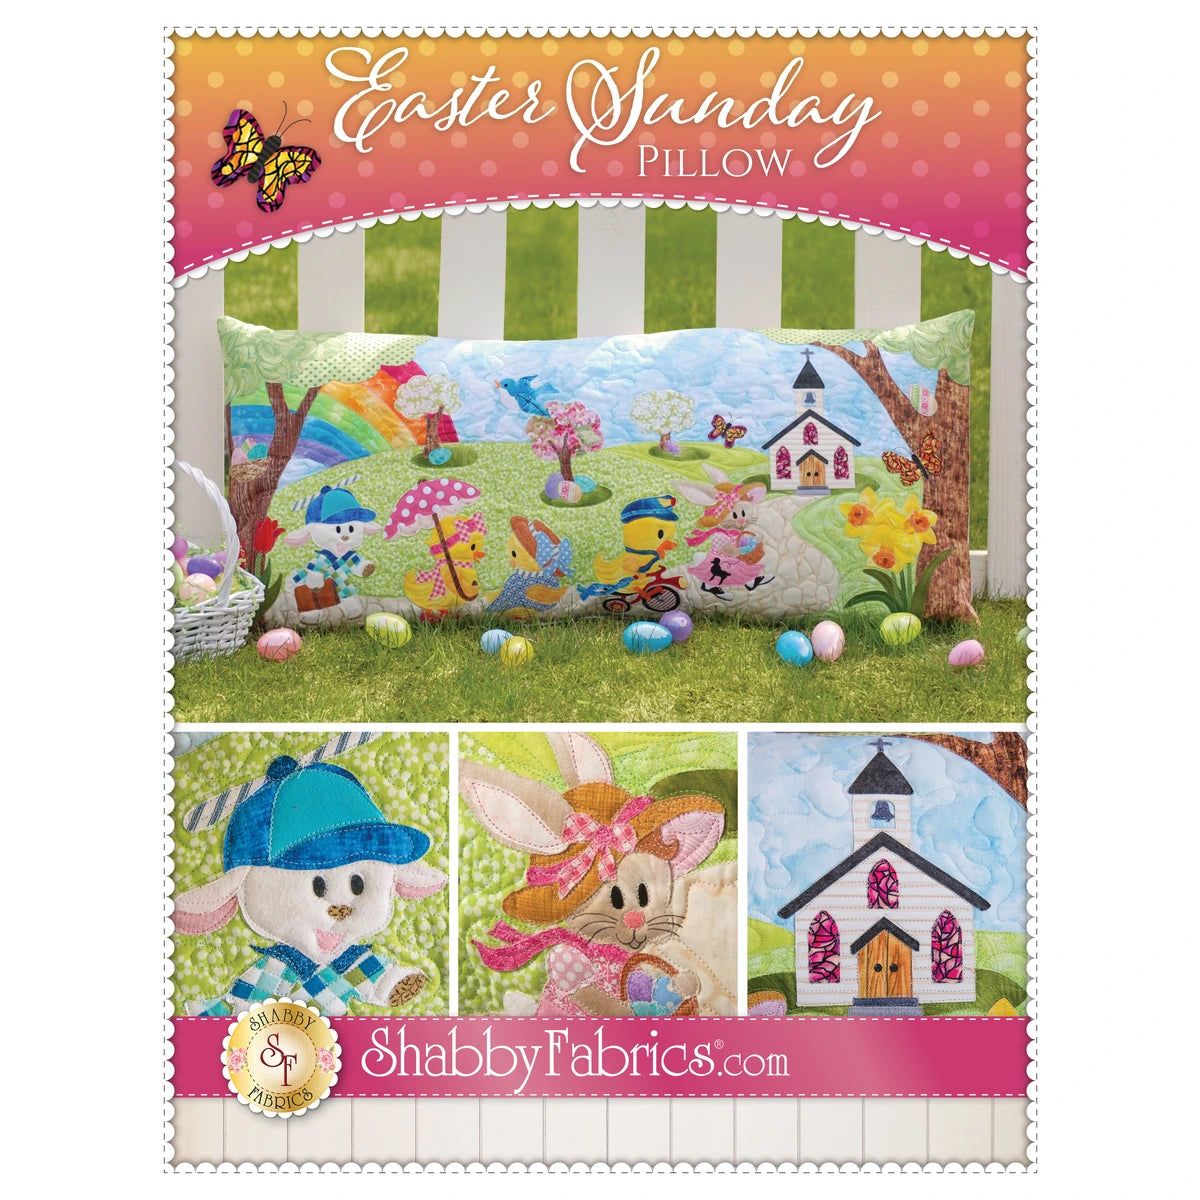 Shabby Fabrics Easter Sunday Series - Pillow Pattern